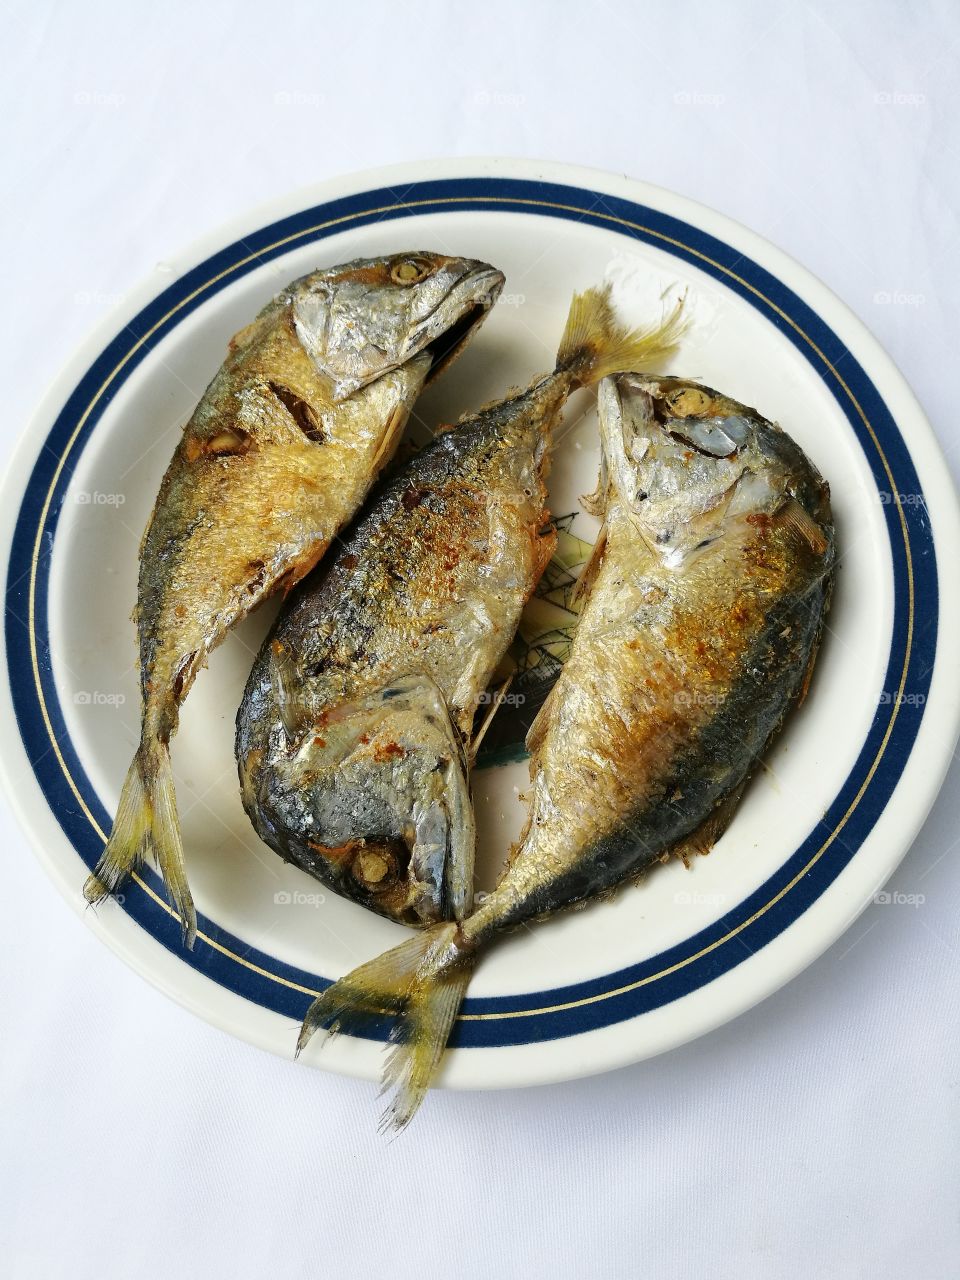 Fried mackerel fish